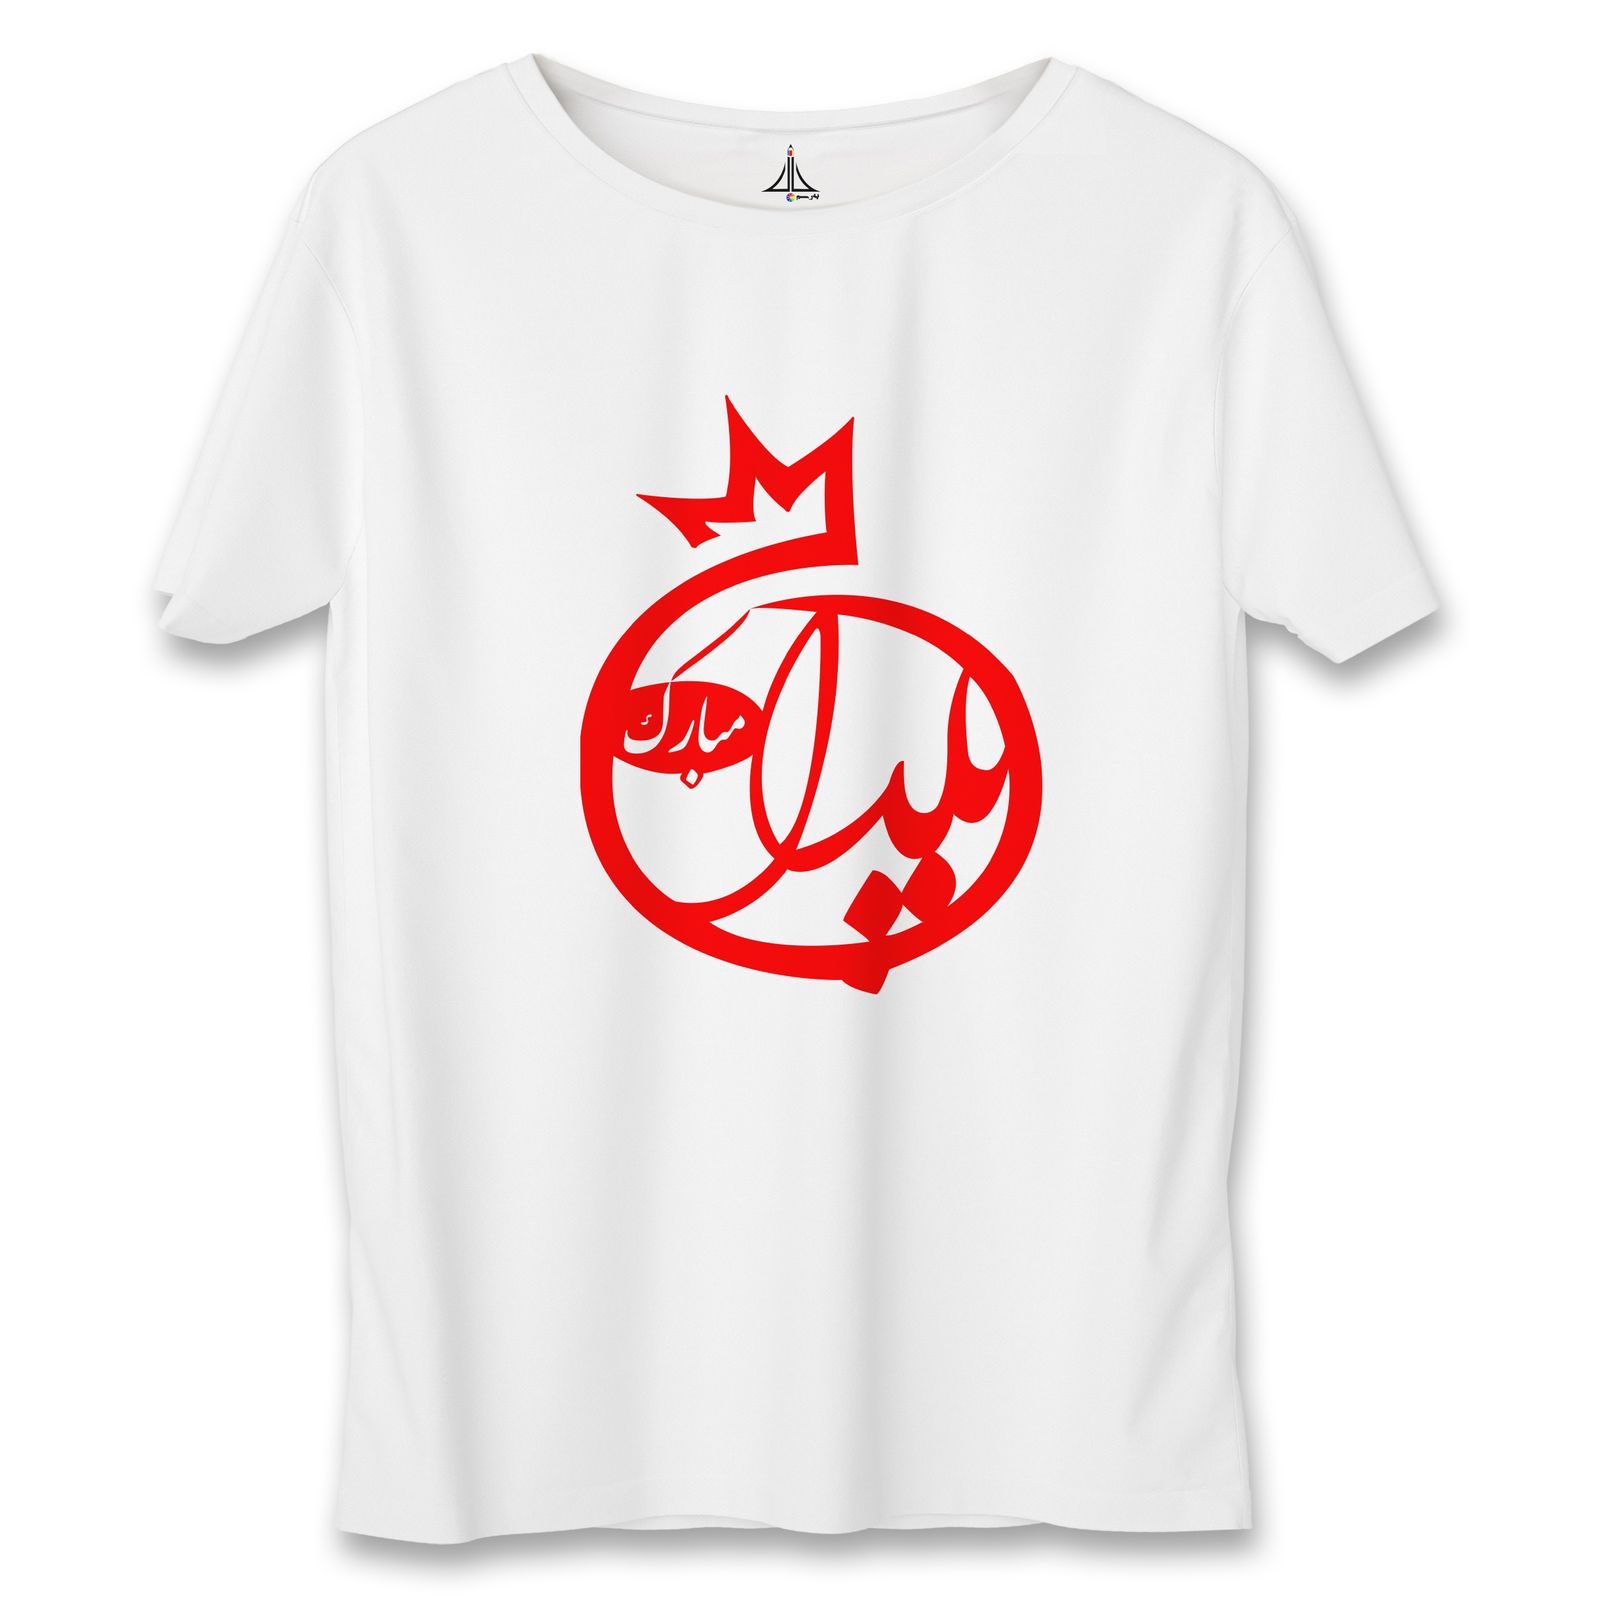 تی شرت زنانه به رسم طرح یلدا کد 5560 -  - 1